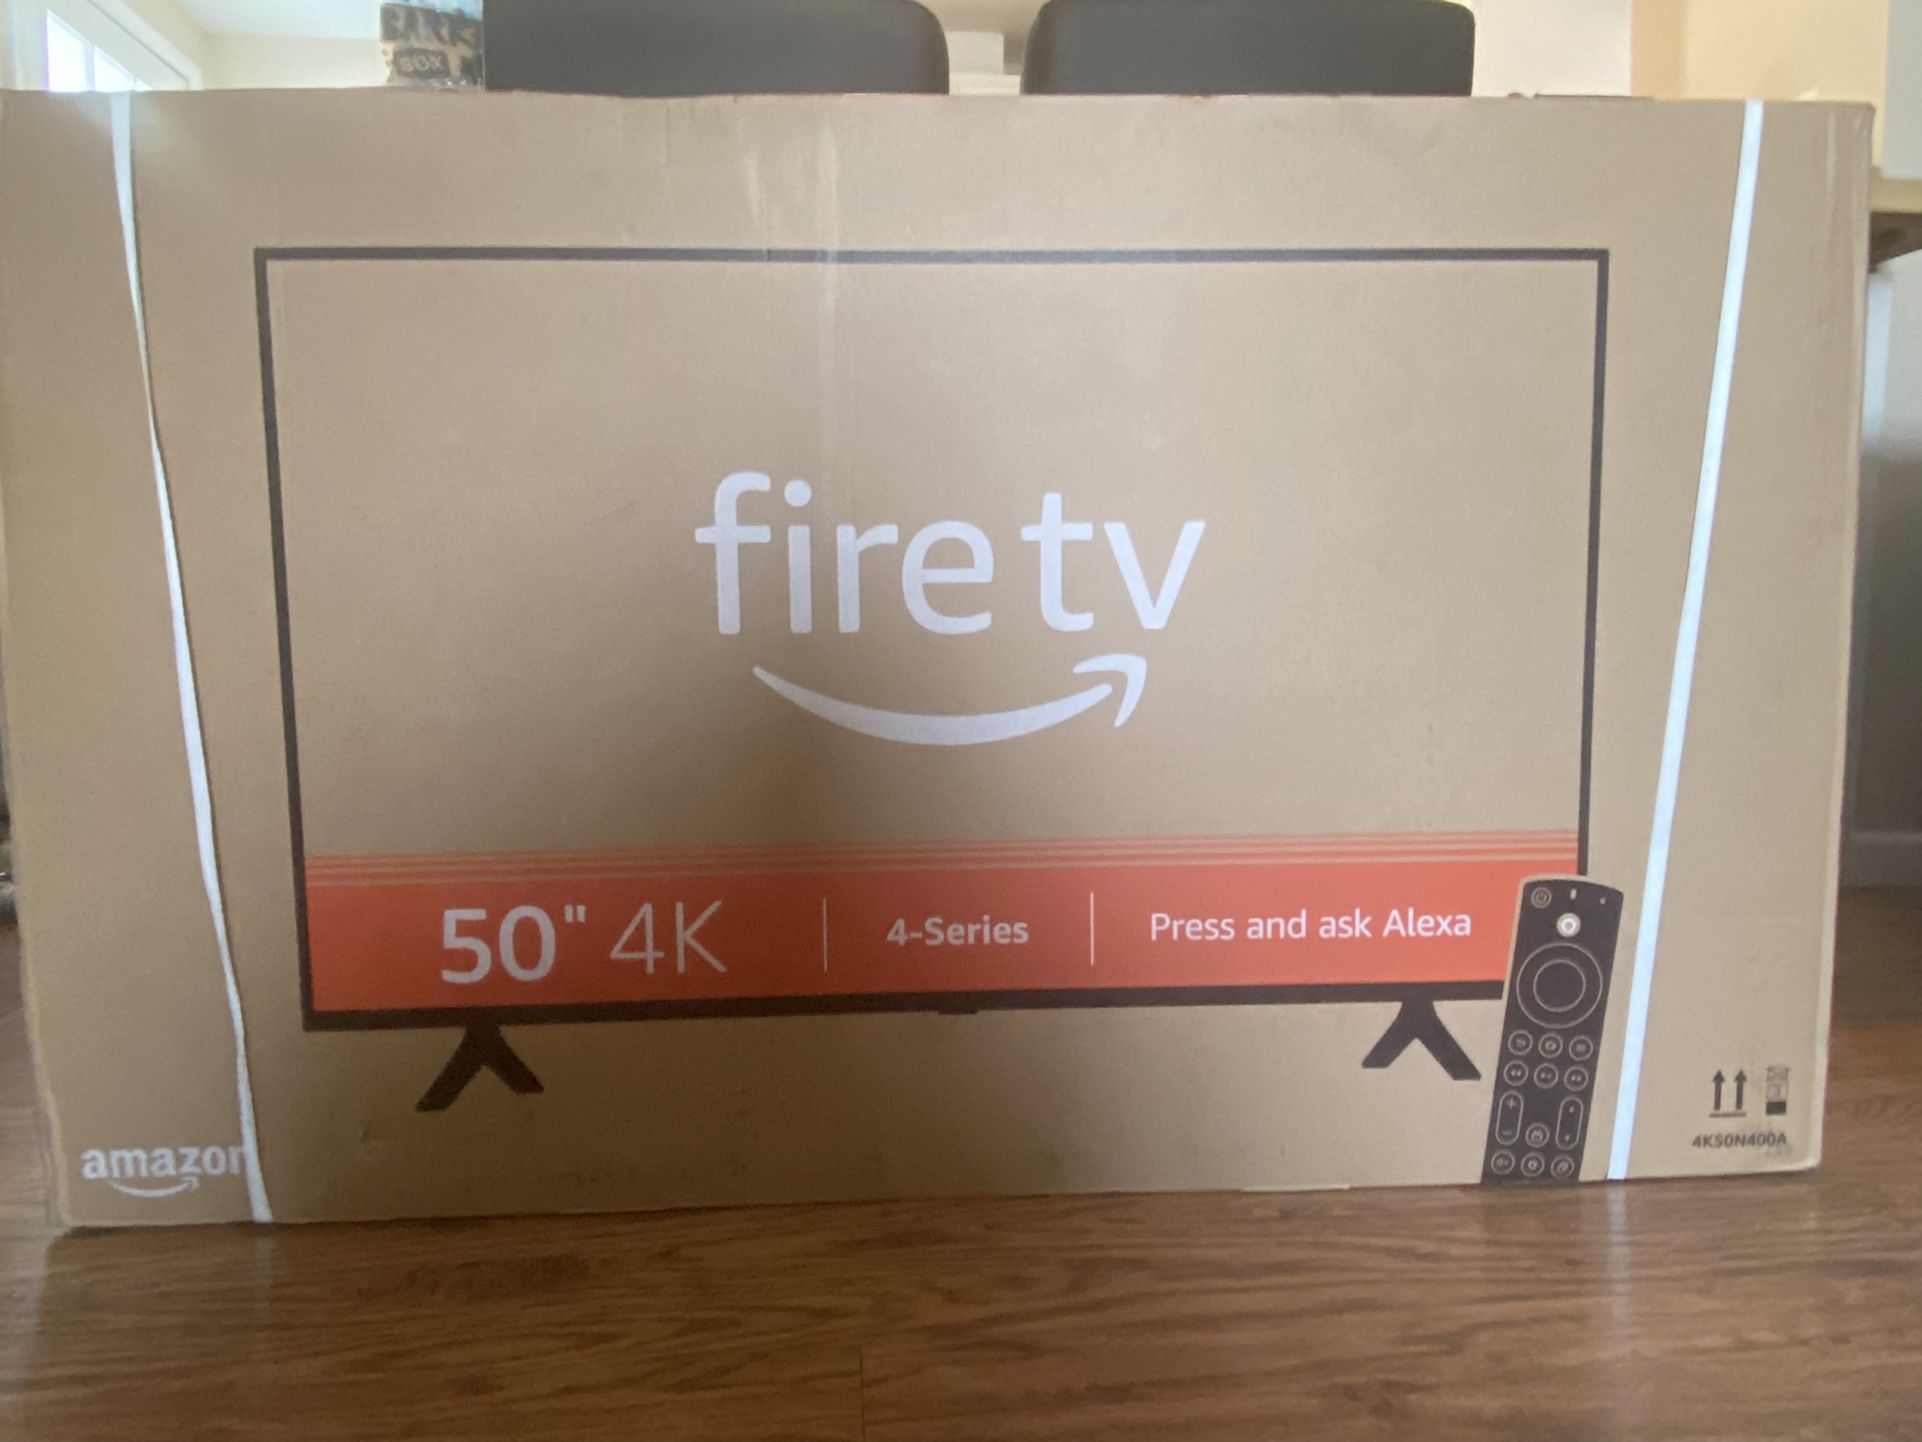 Amazon Fire TV 50” 4K UHD - New In Box